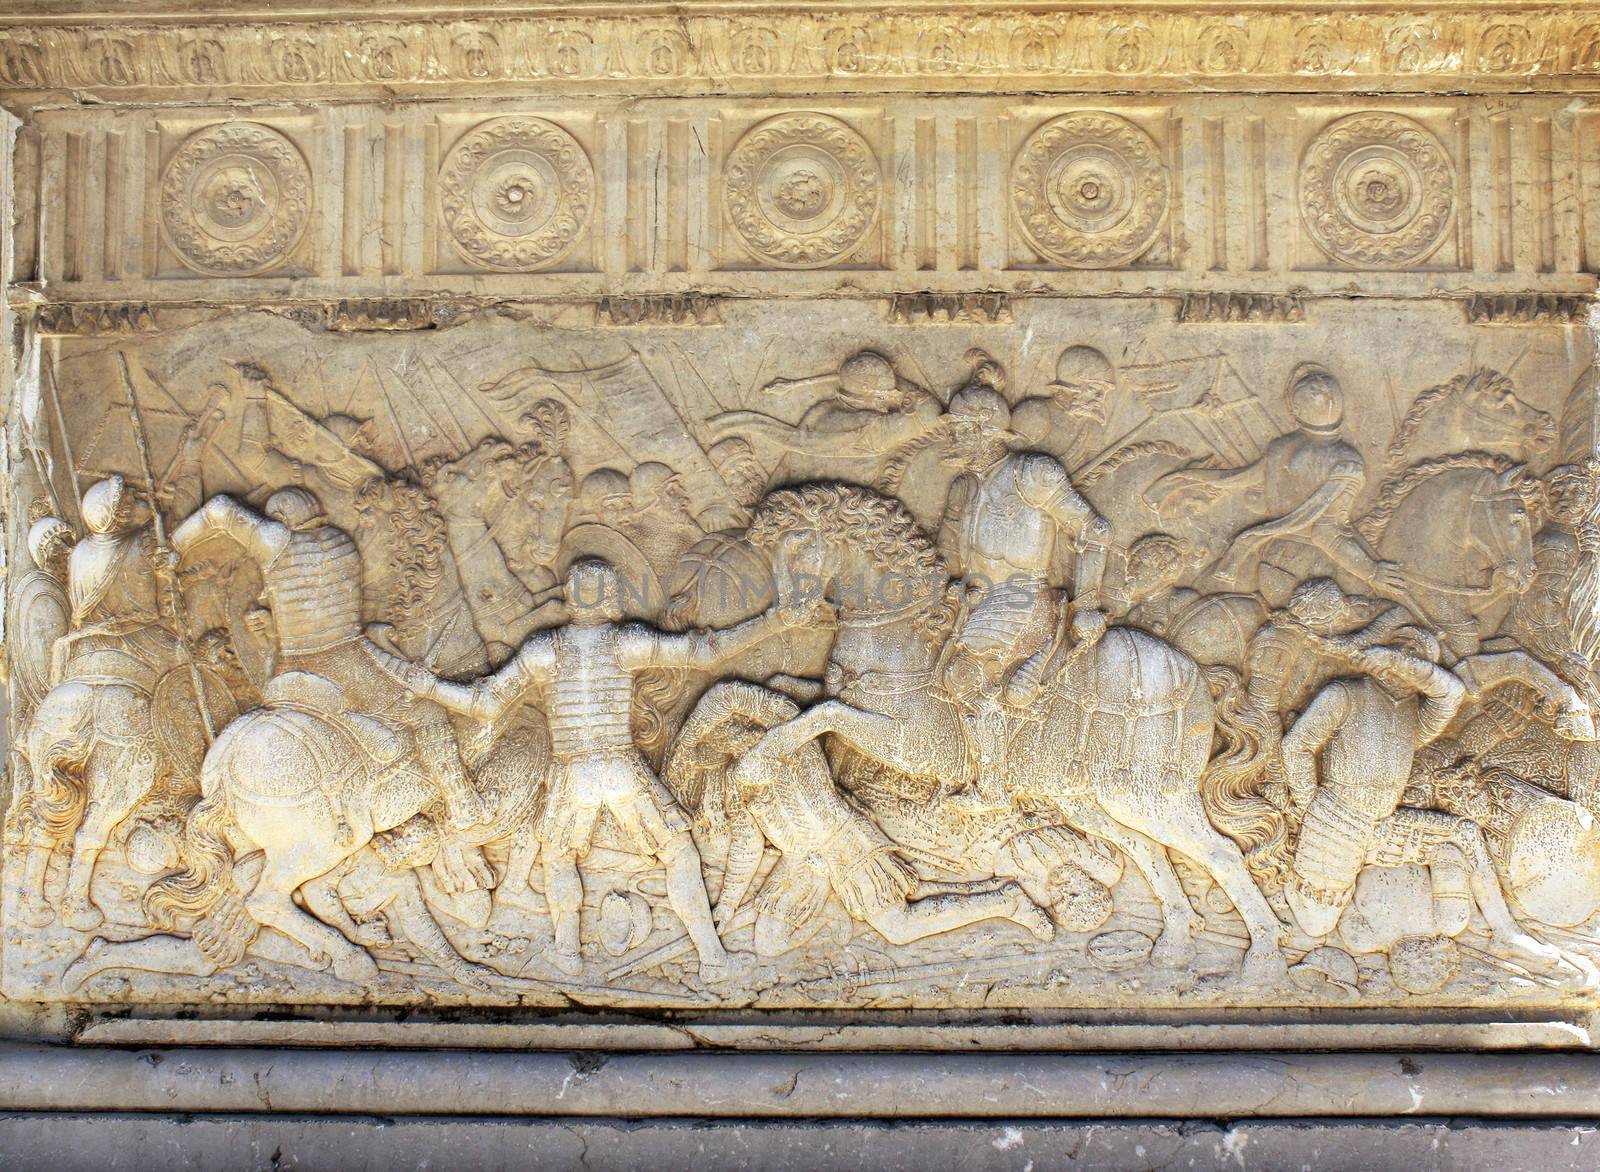 Sculptural battle scene in Alhambra, Spain by frenta